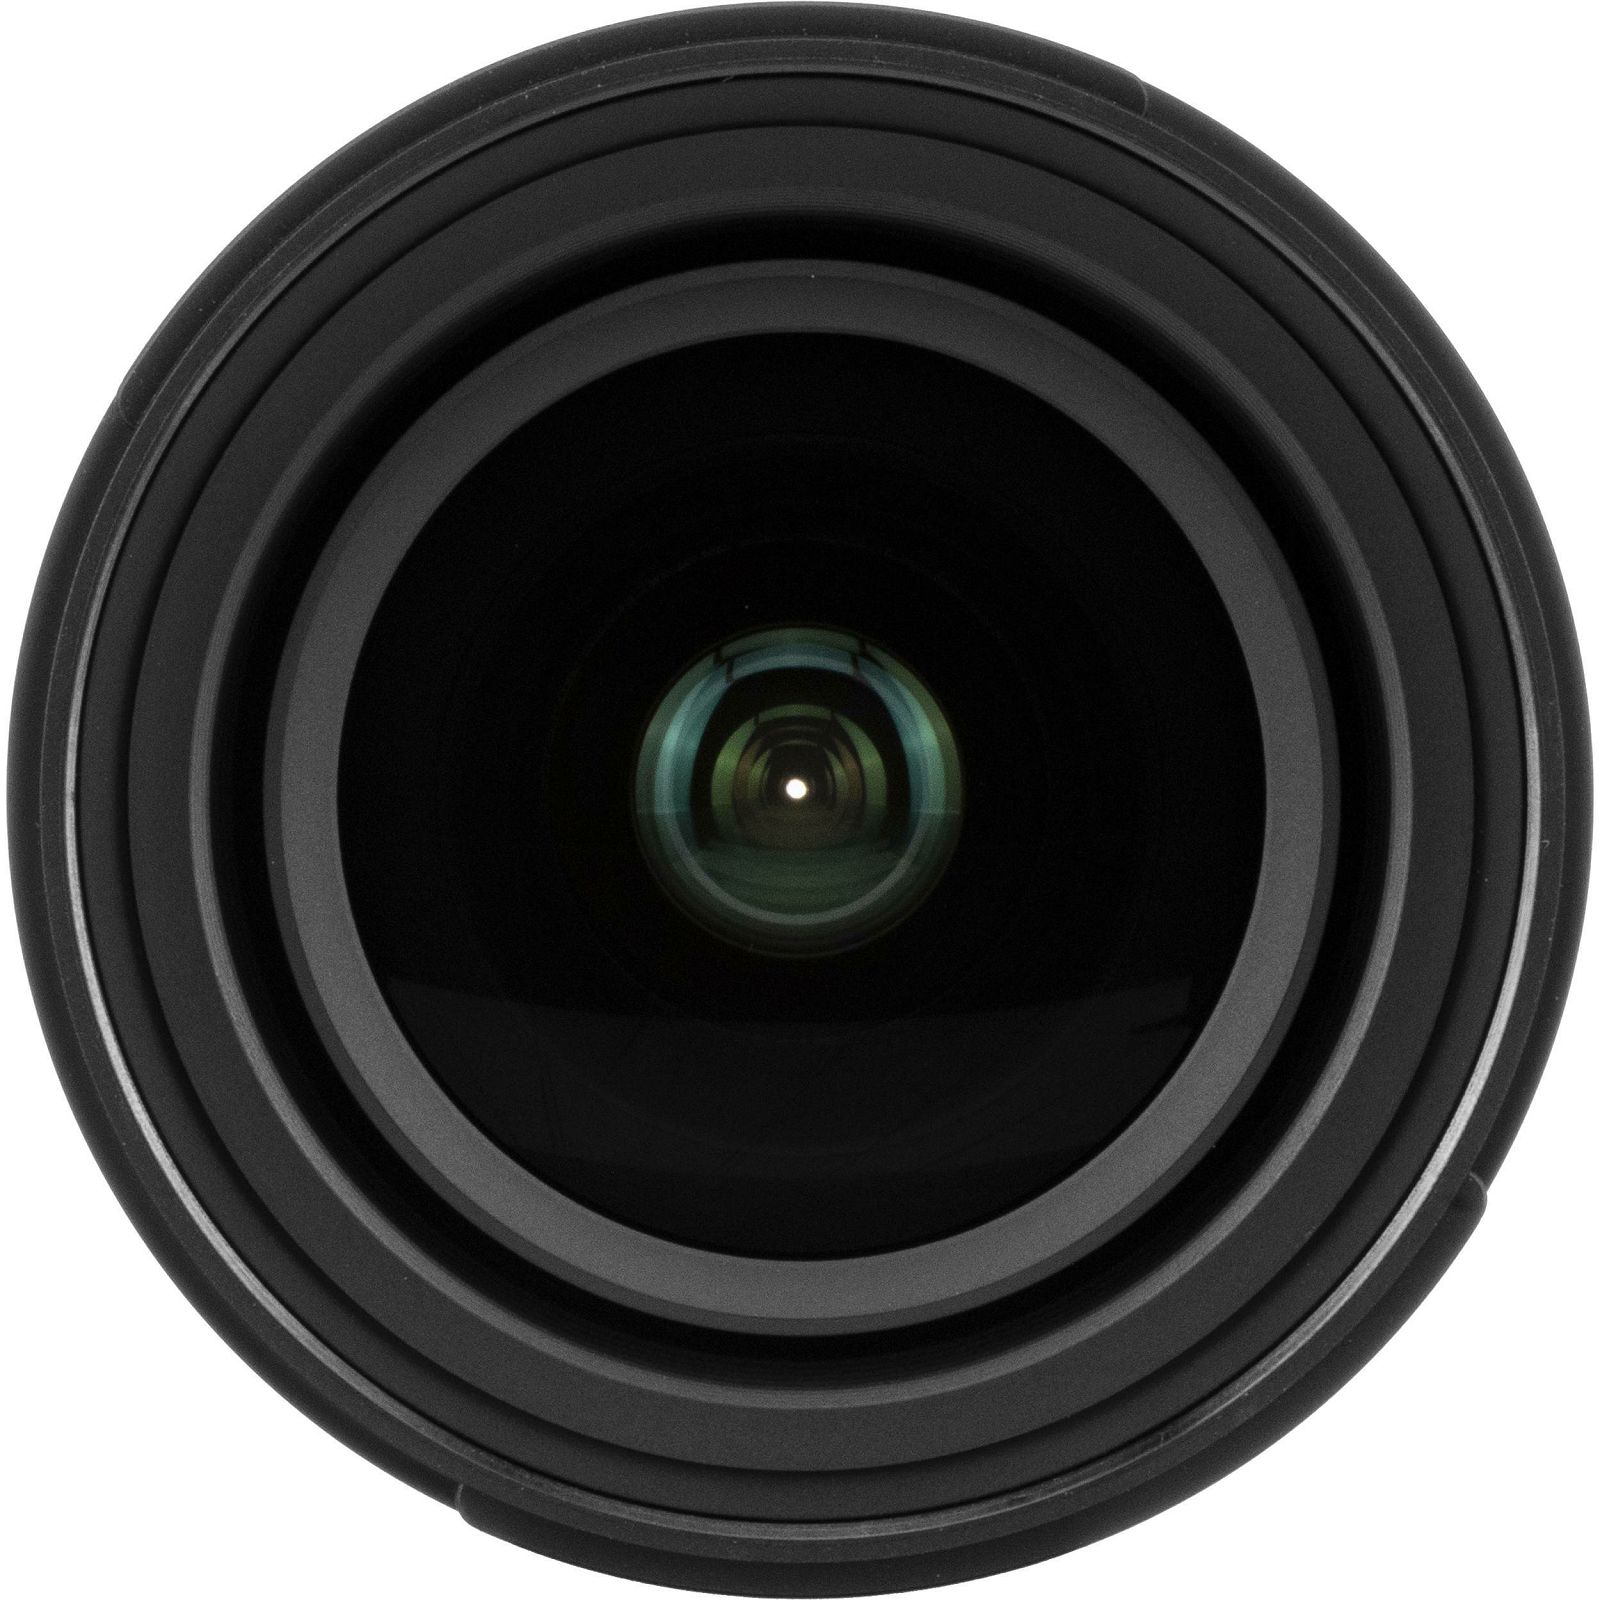 Tamron 17-28mm f/2.8 Di III RXD širokokutni objektiv za Sony E-mount (A046SF)